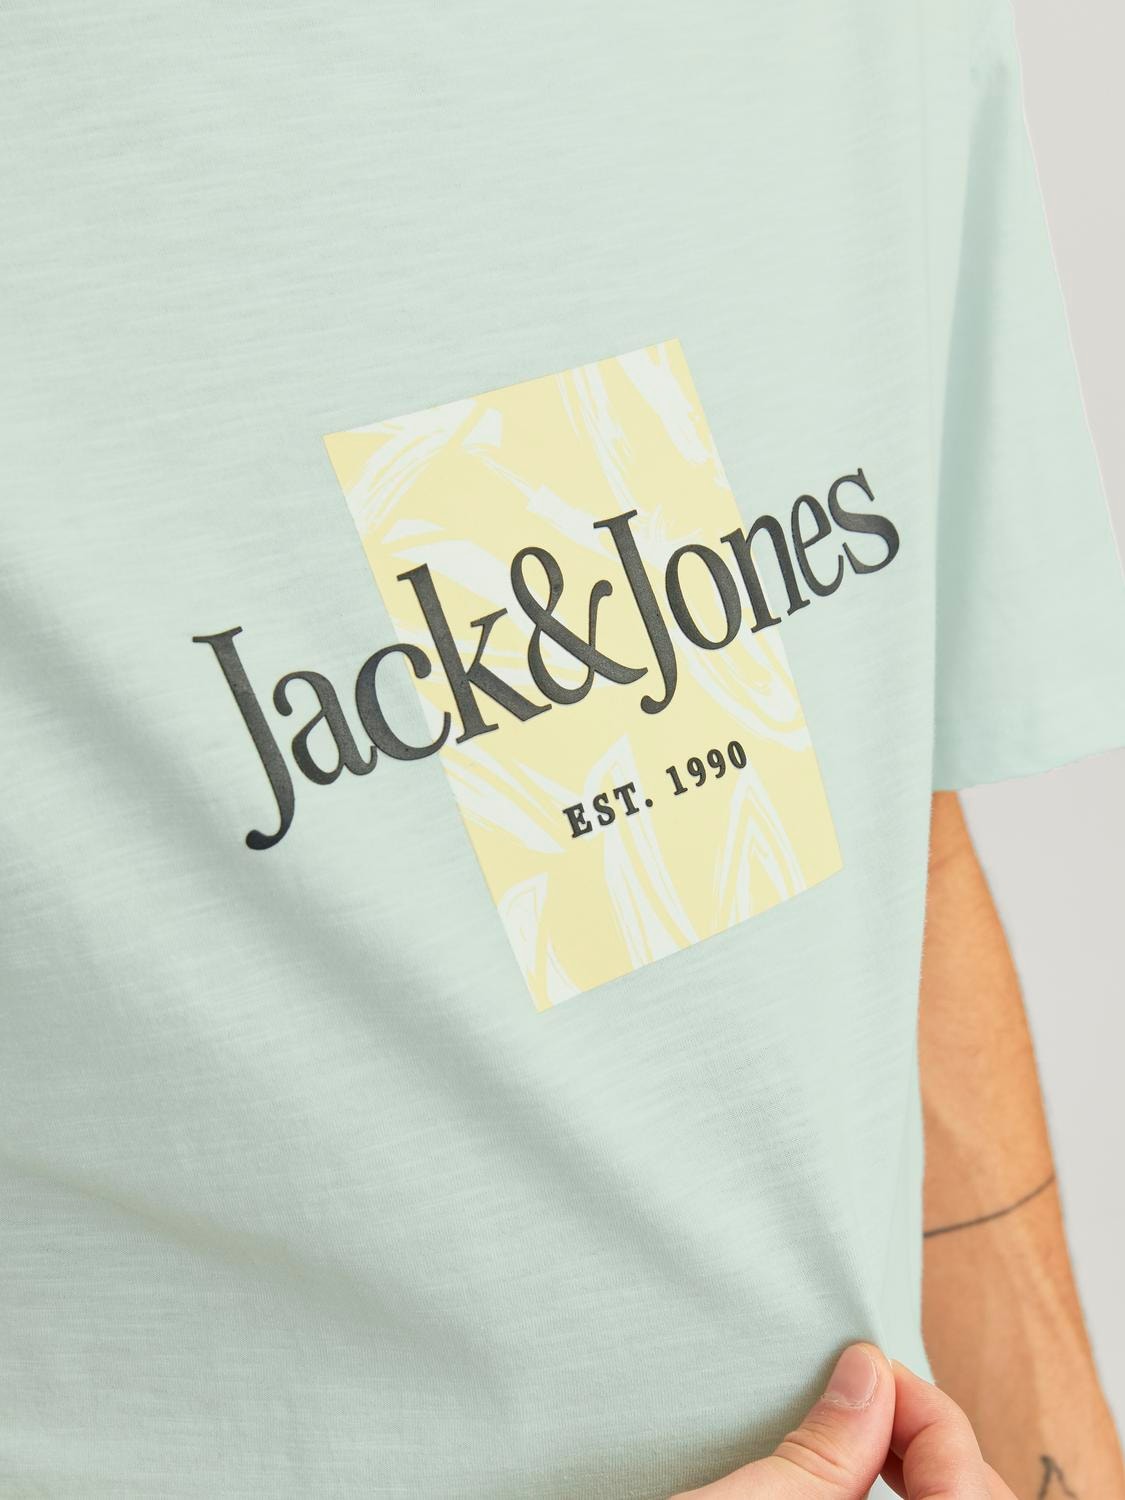 Jack & Jones Logo Crew neck T-shirt -Skylight - 12250436